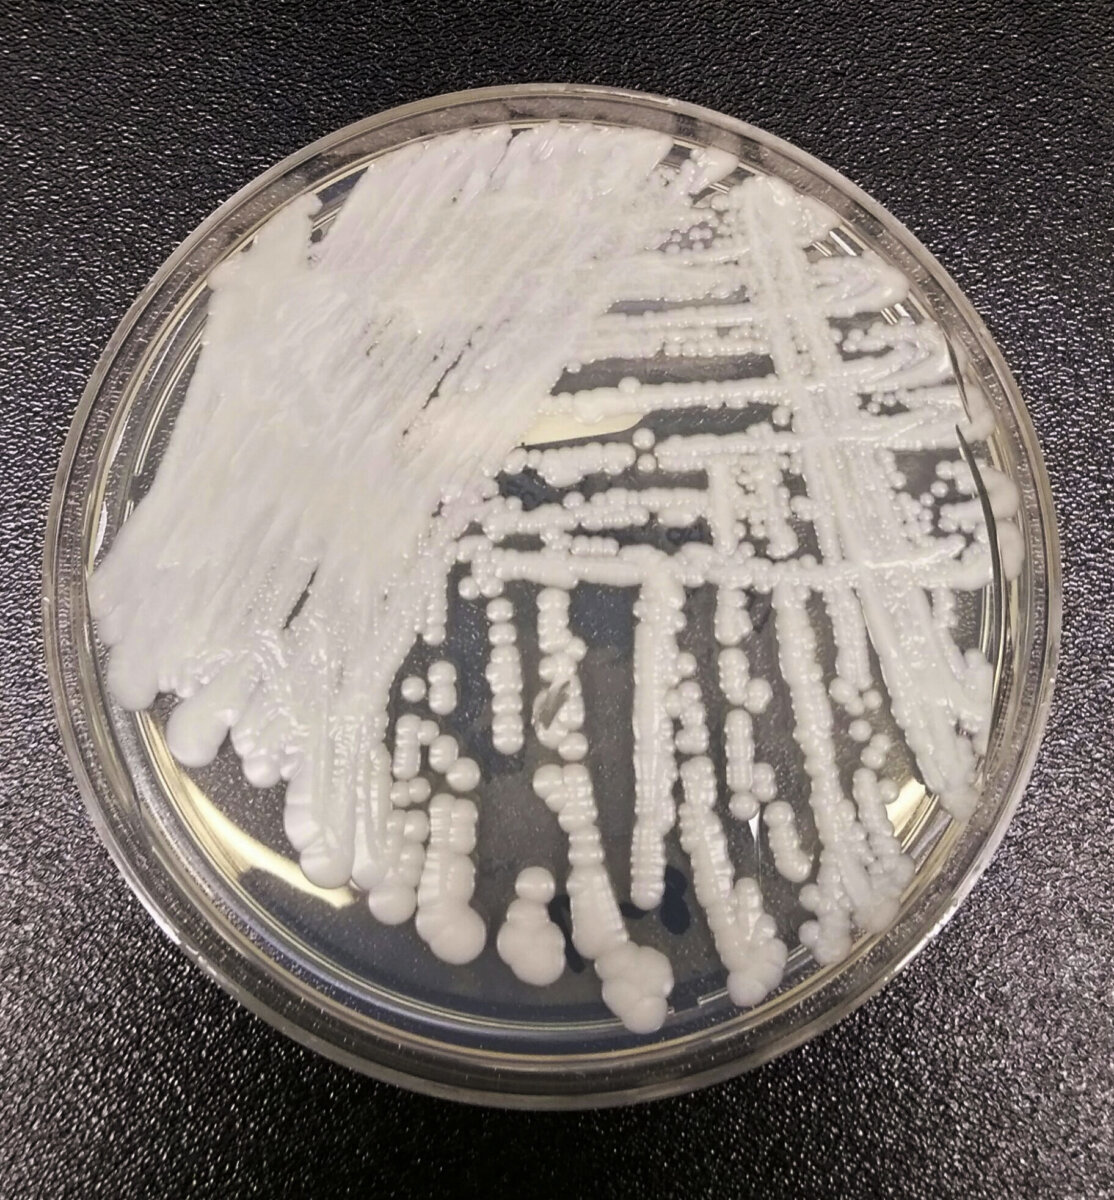 Superbug Fungus